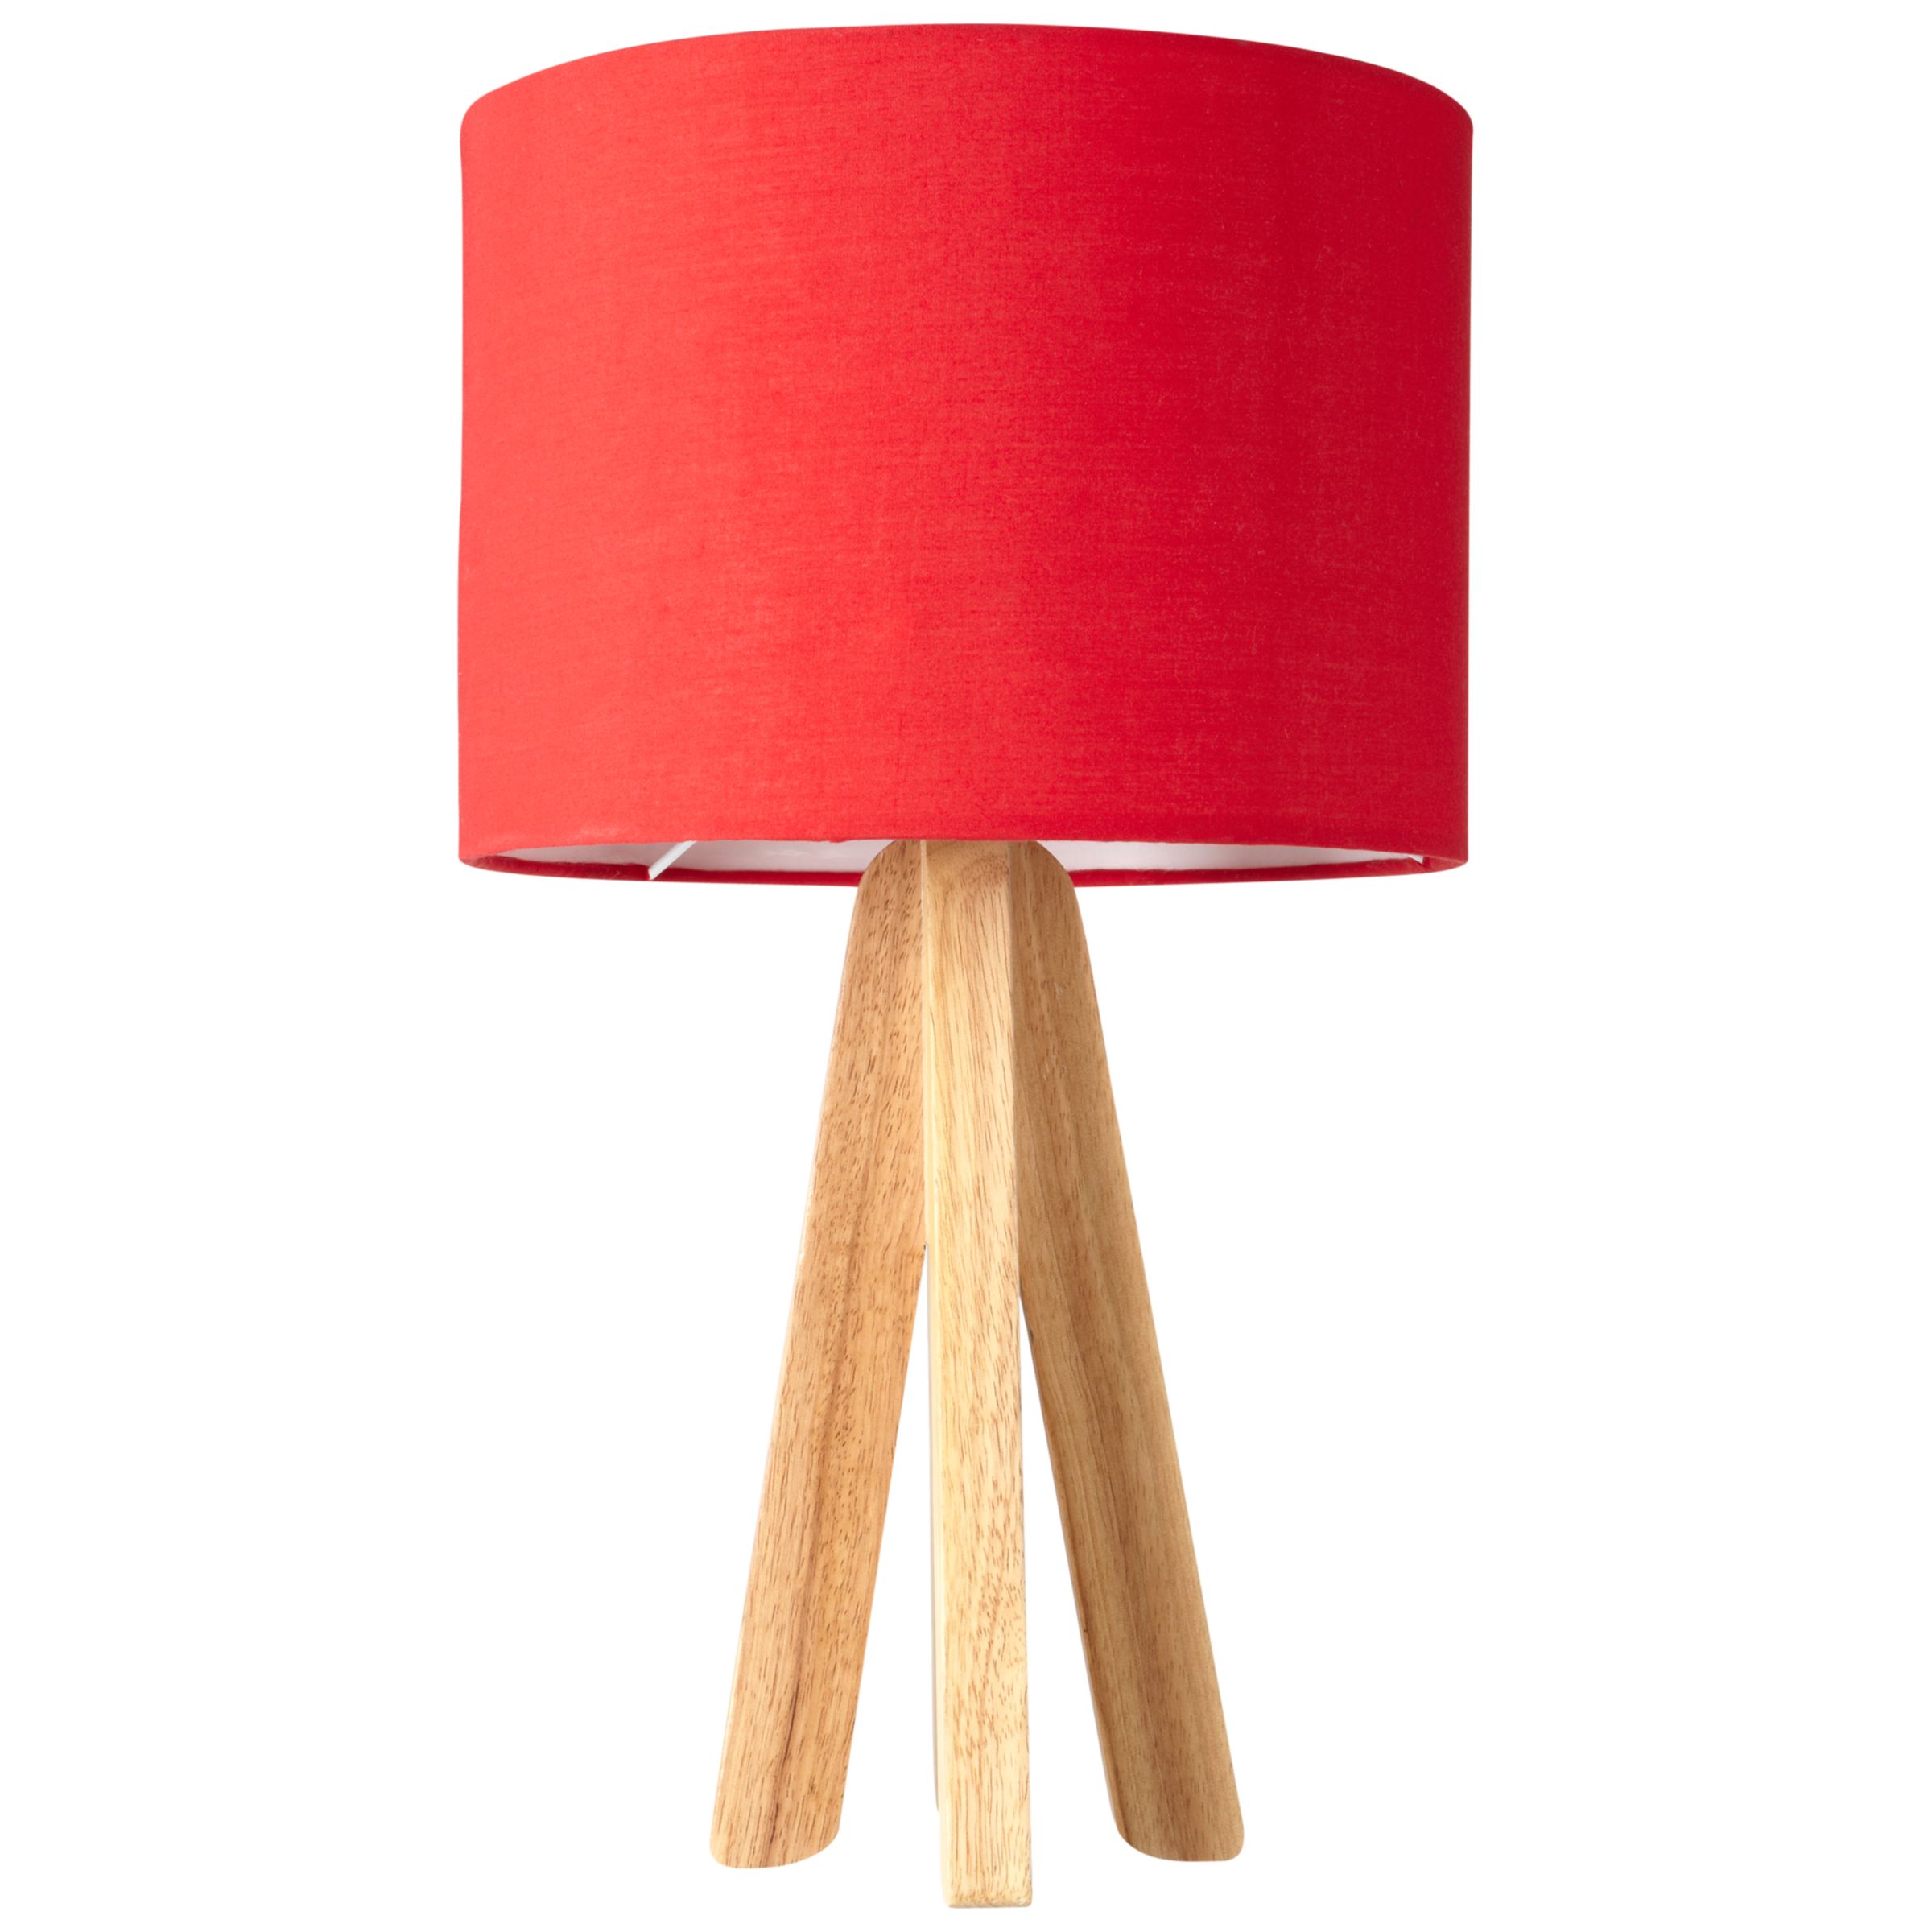 John Lewis Kylie Table Lamp, Red